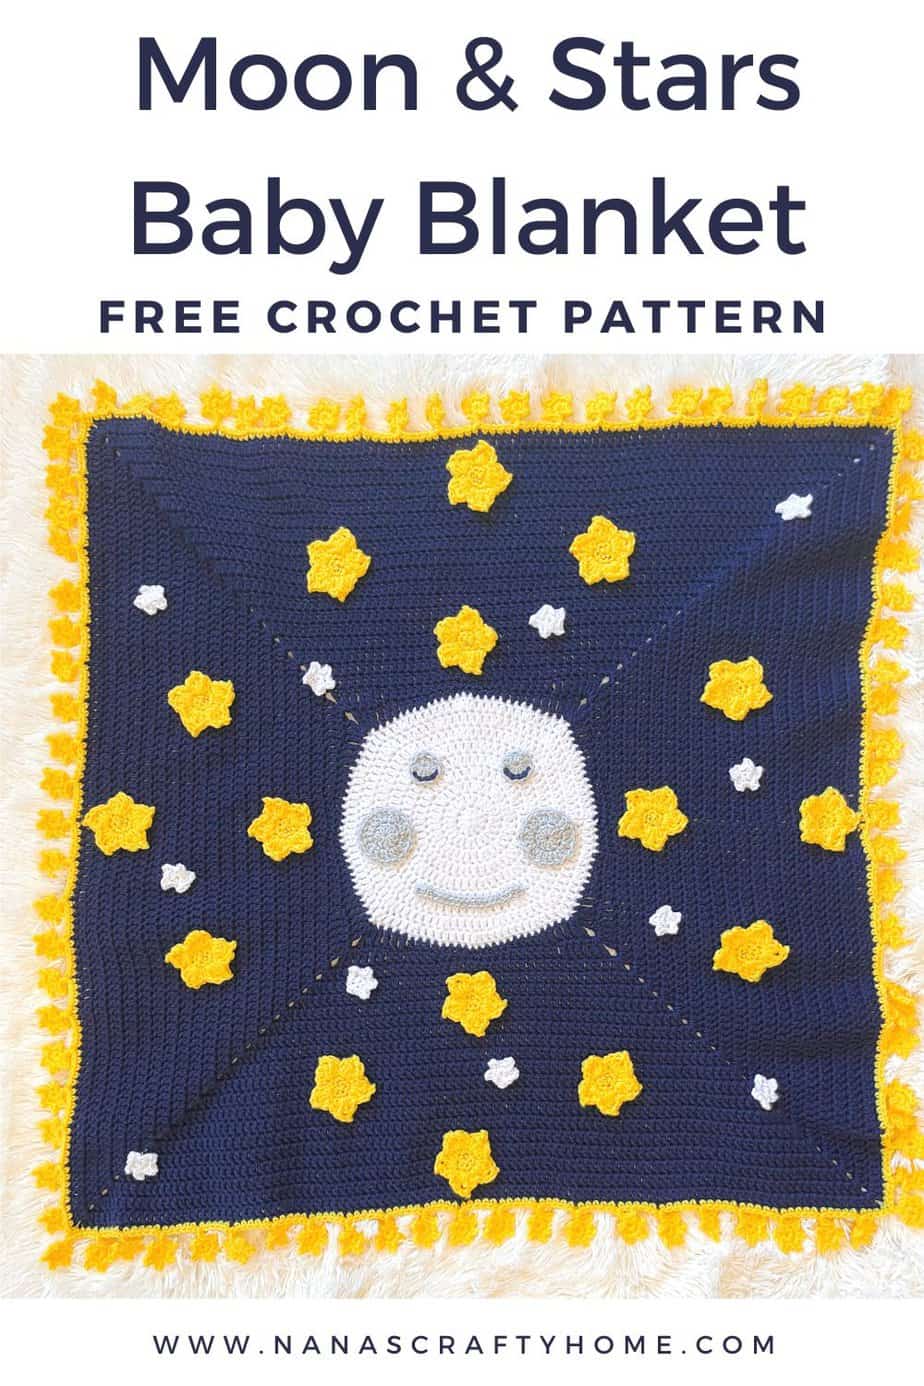 Crochet Moon Blanket with stars Baby Blanket free crochet pattern